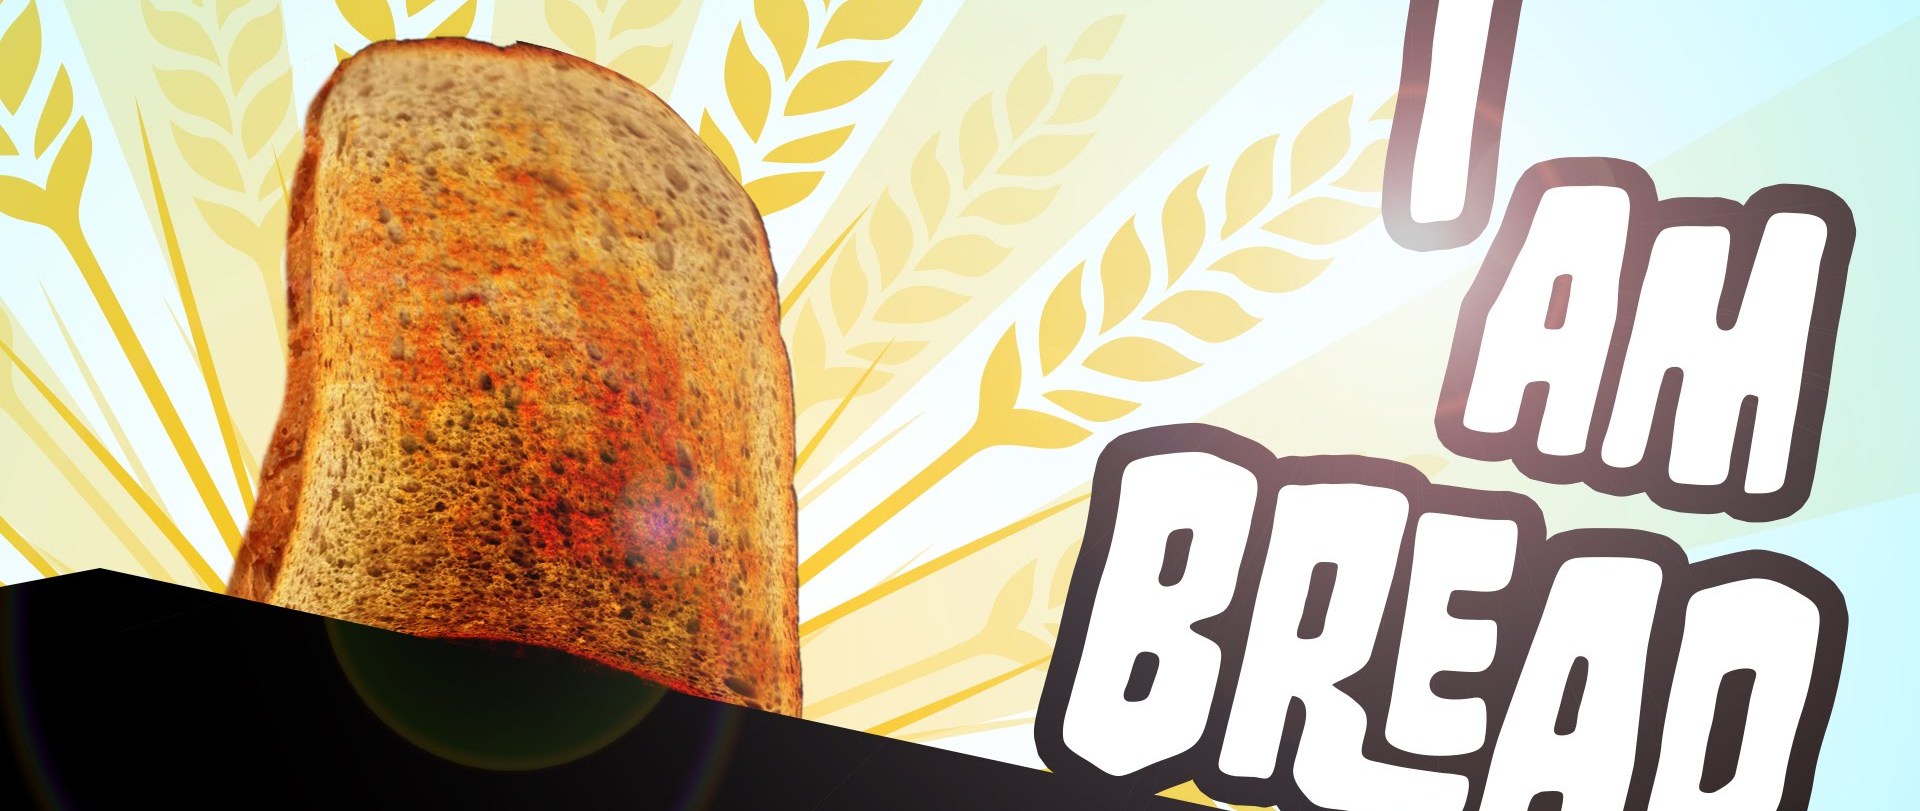 Kromka chleba – historia prawdziwa